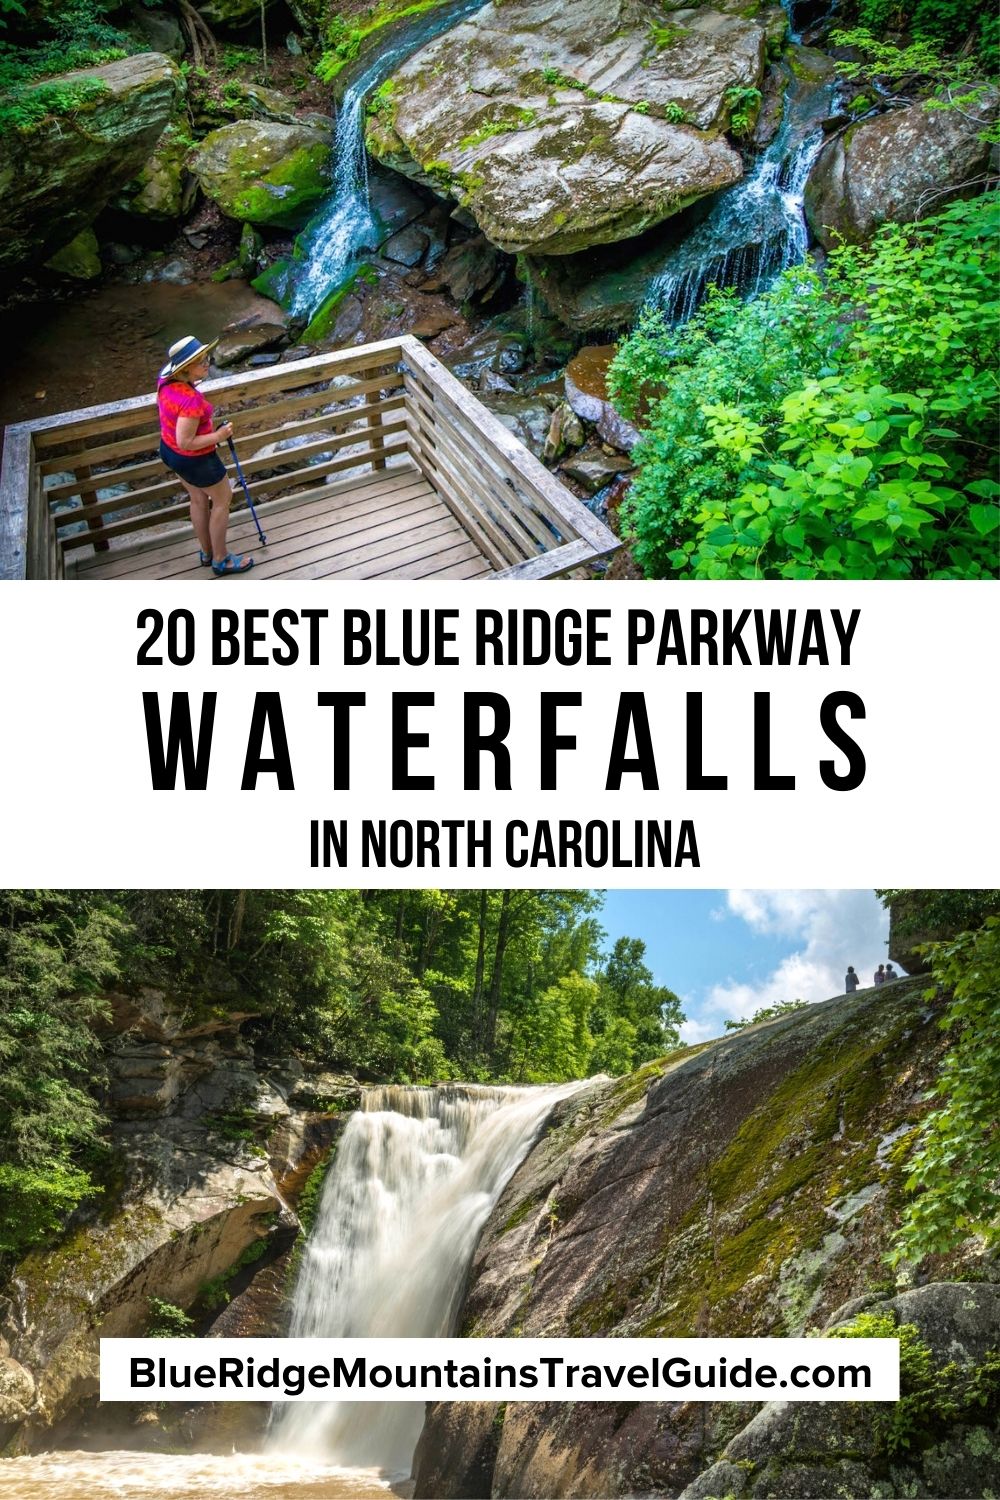 The 25 Best Blue Ridge Parkway Waterfalls in North Carolina